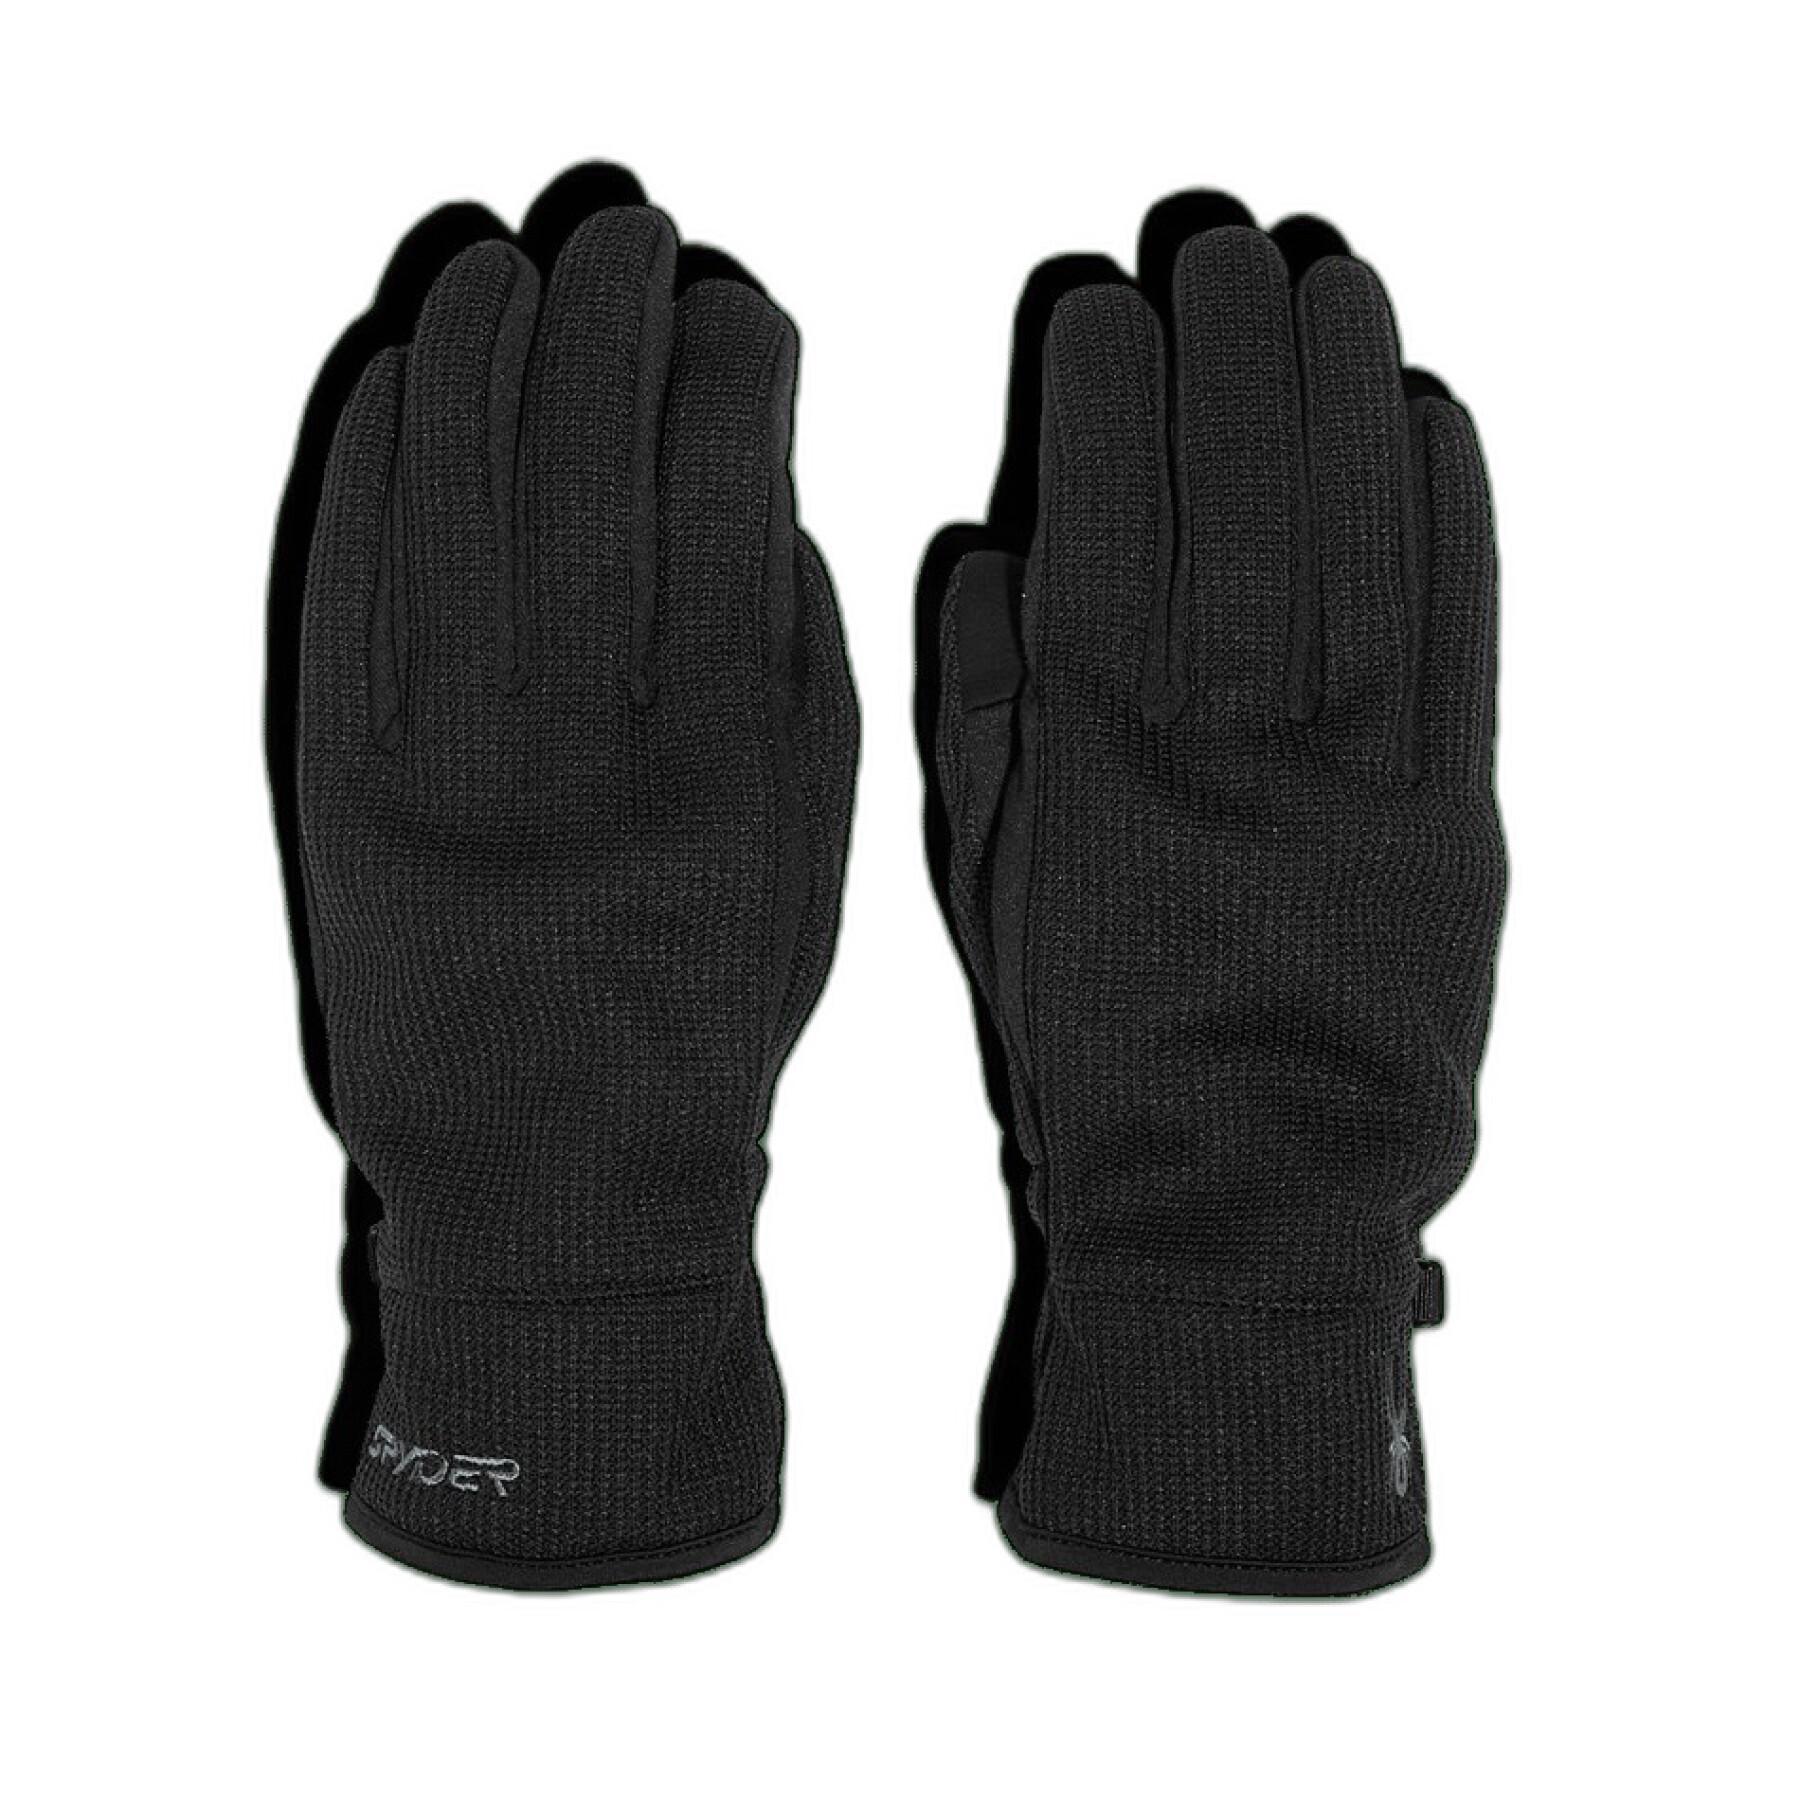 Spyder rukavice Bandit Gloves black Velikost: L